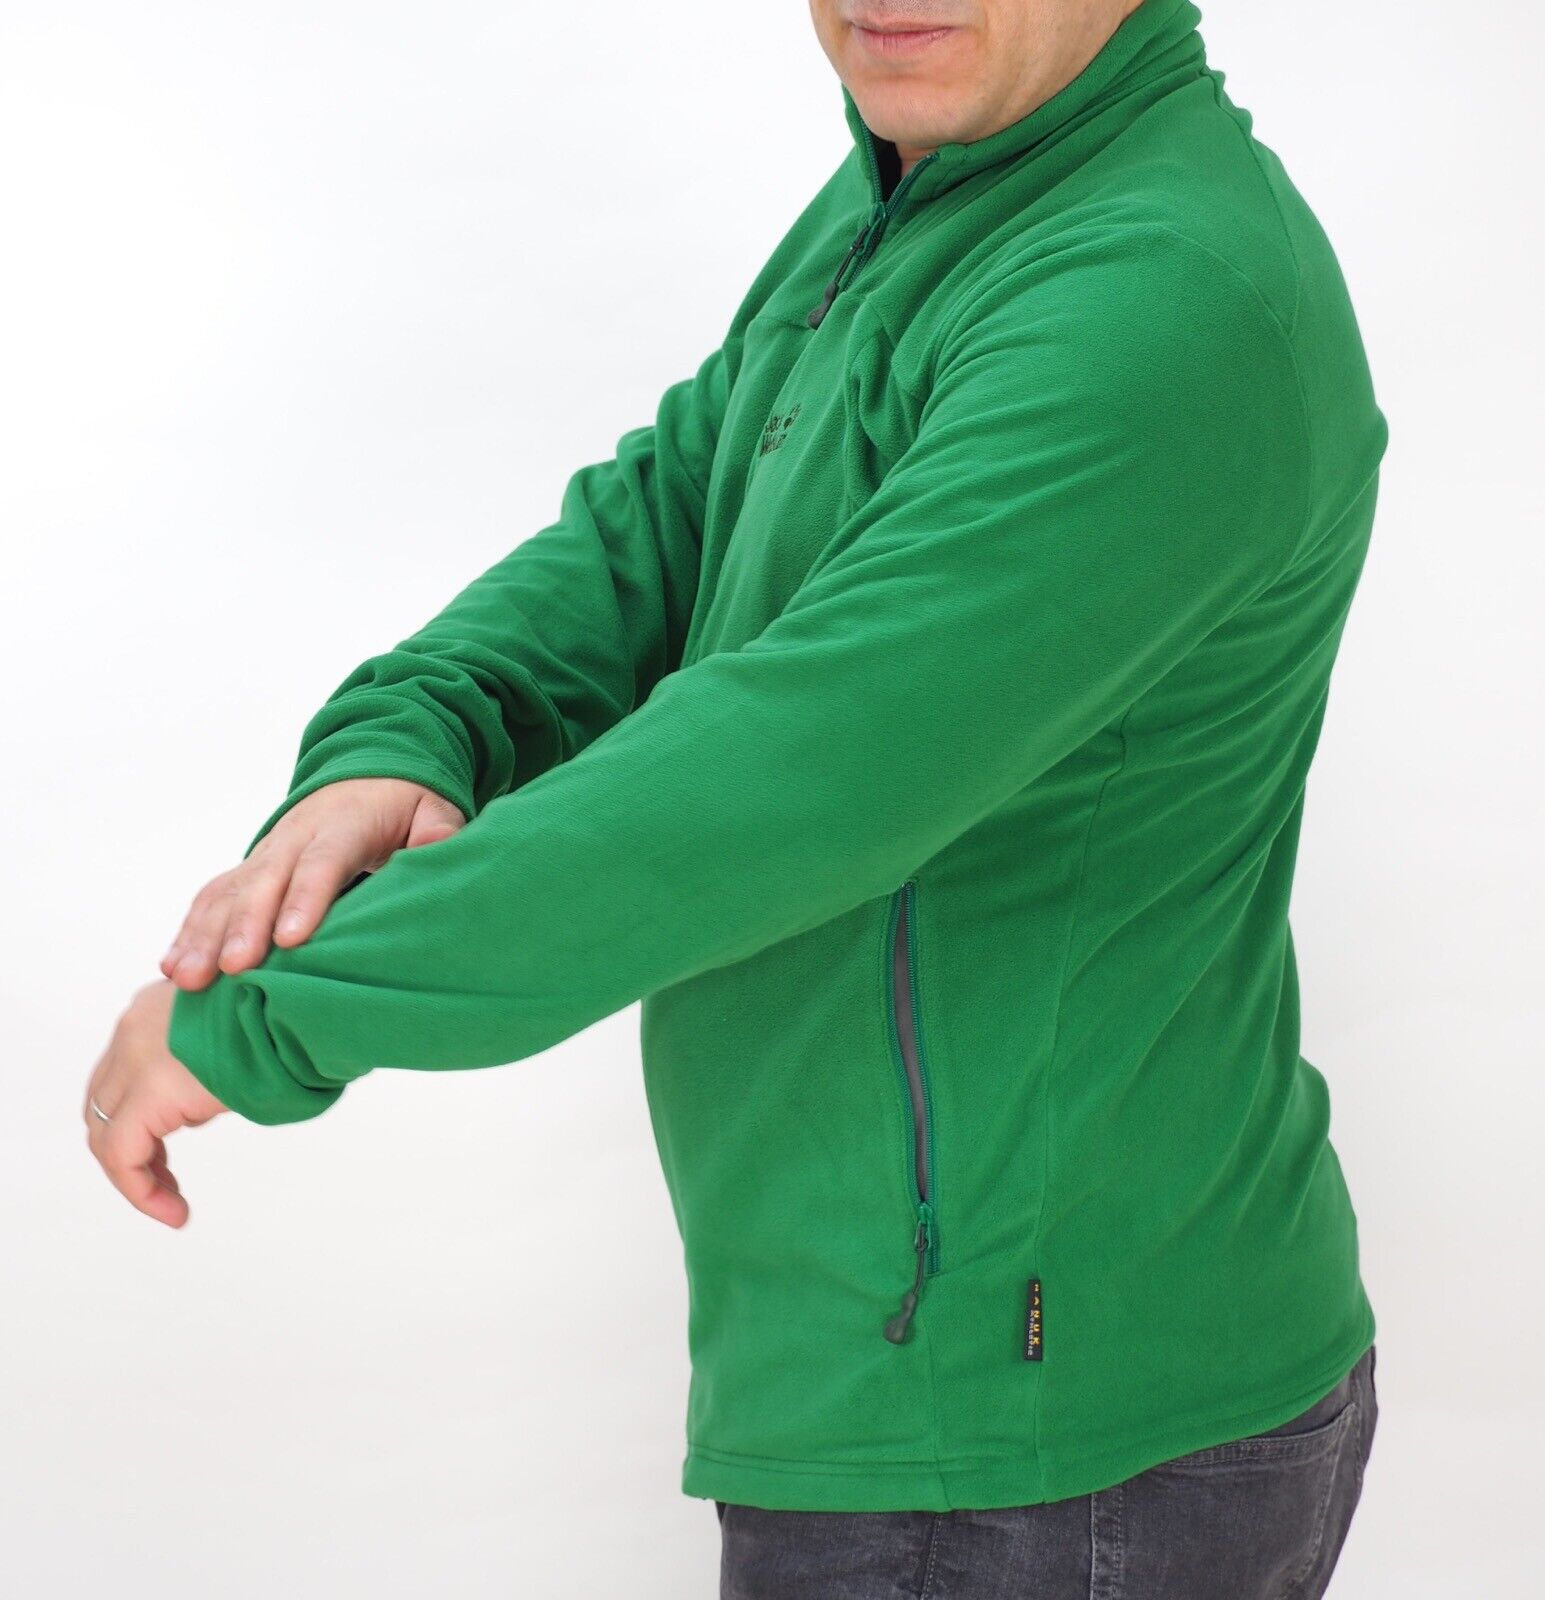 Mens Jack Wolfskin Perfor 5007731 Cucumber Green Zip Up Warm Fleece Sweatshirt - London Top Style